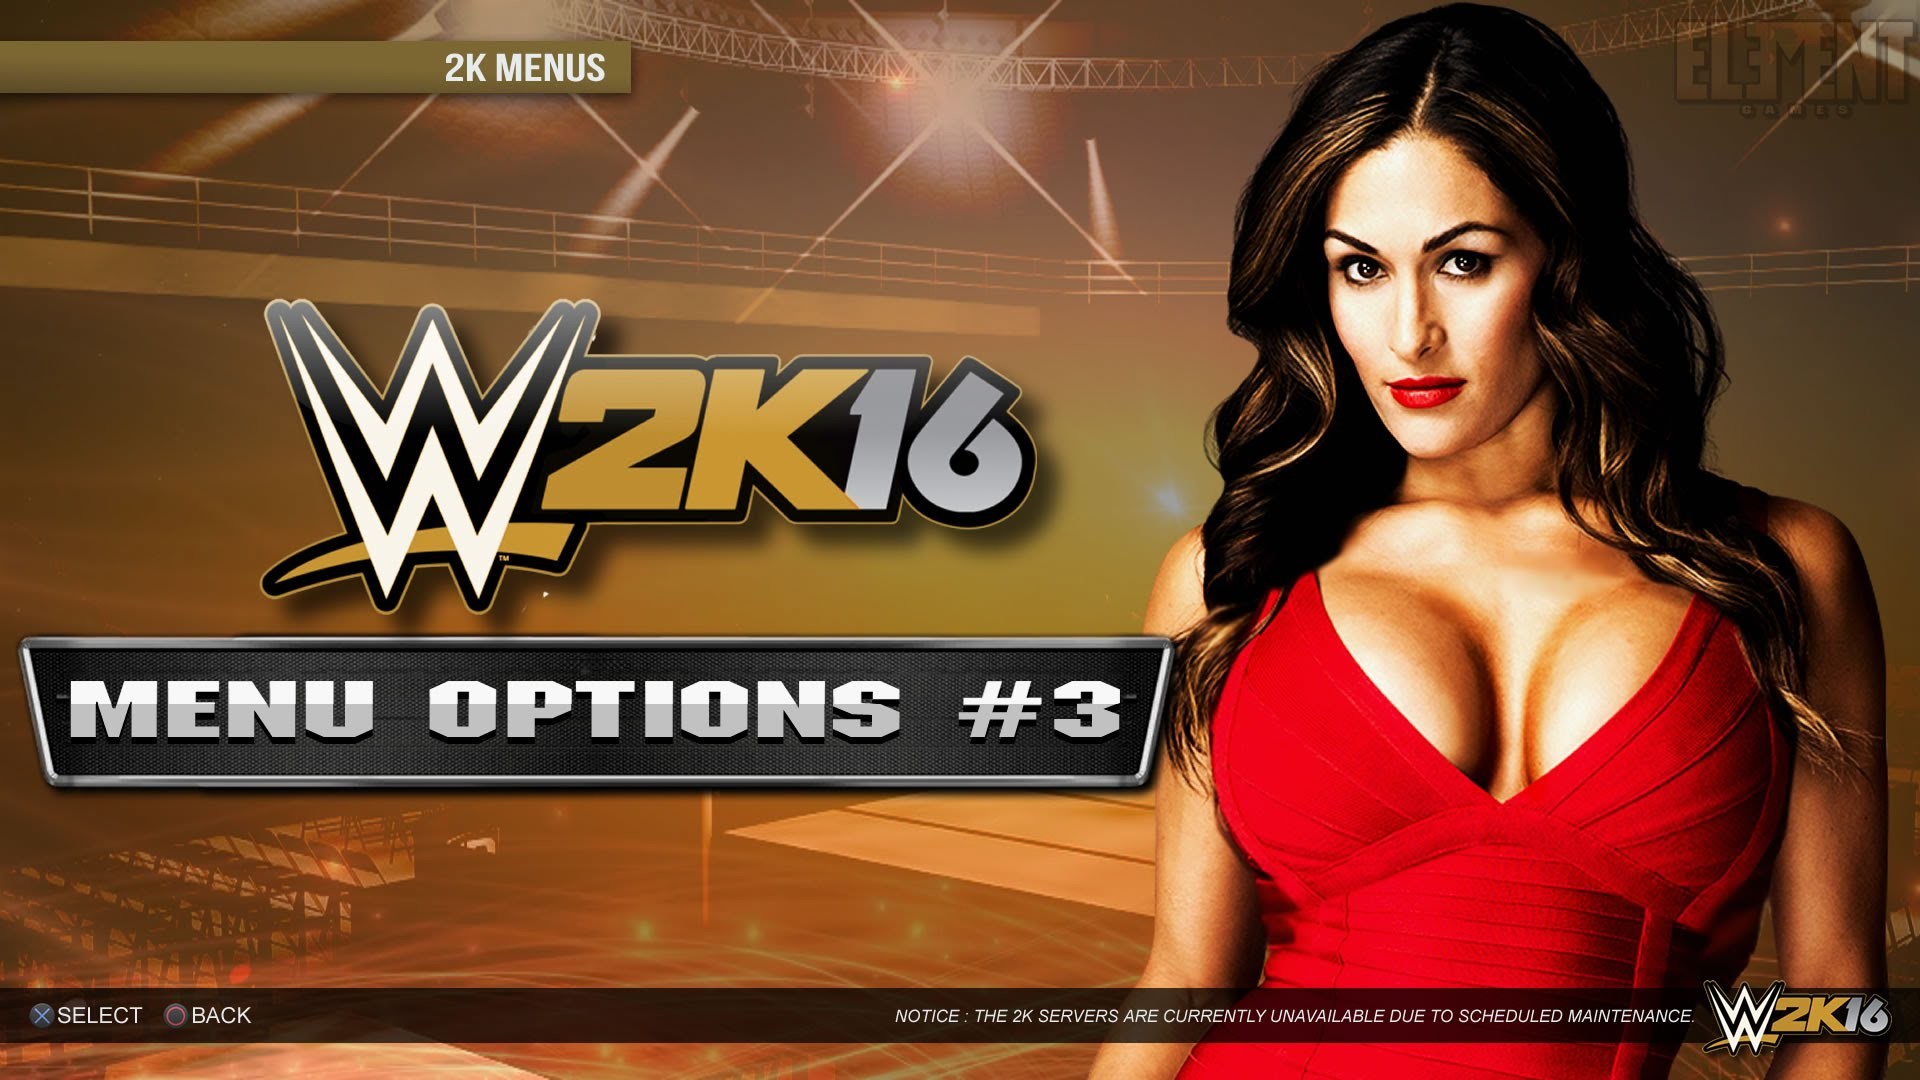 1920x1080 WWE 2K16 Demo - Main Menu Options #3 - Divas - PS4/XB1 Notion